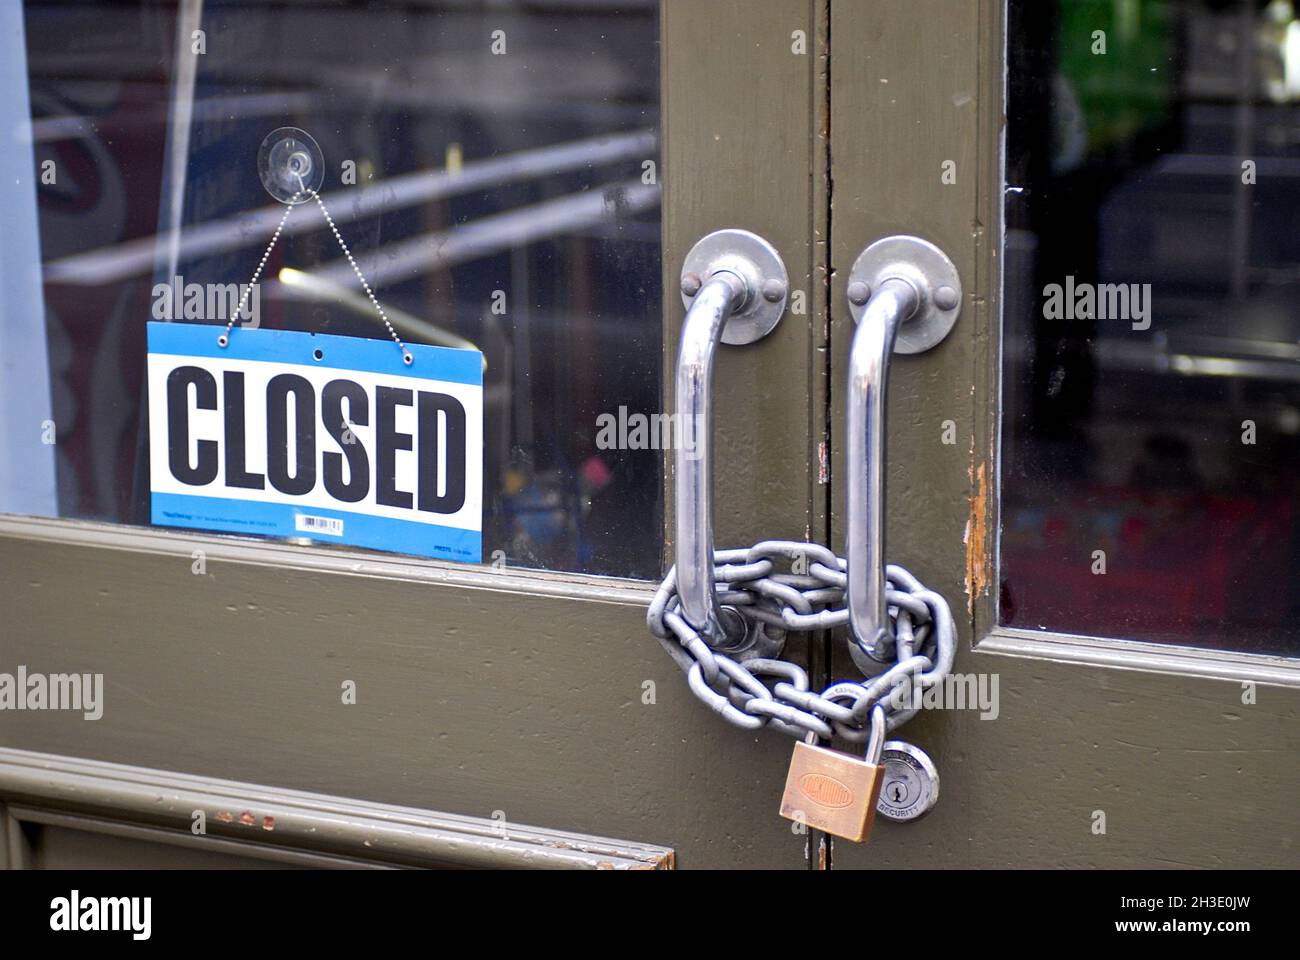 closed door, Australia, Sydney Stock Photo